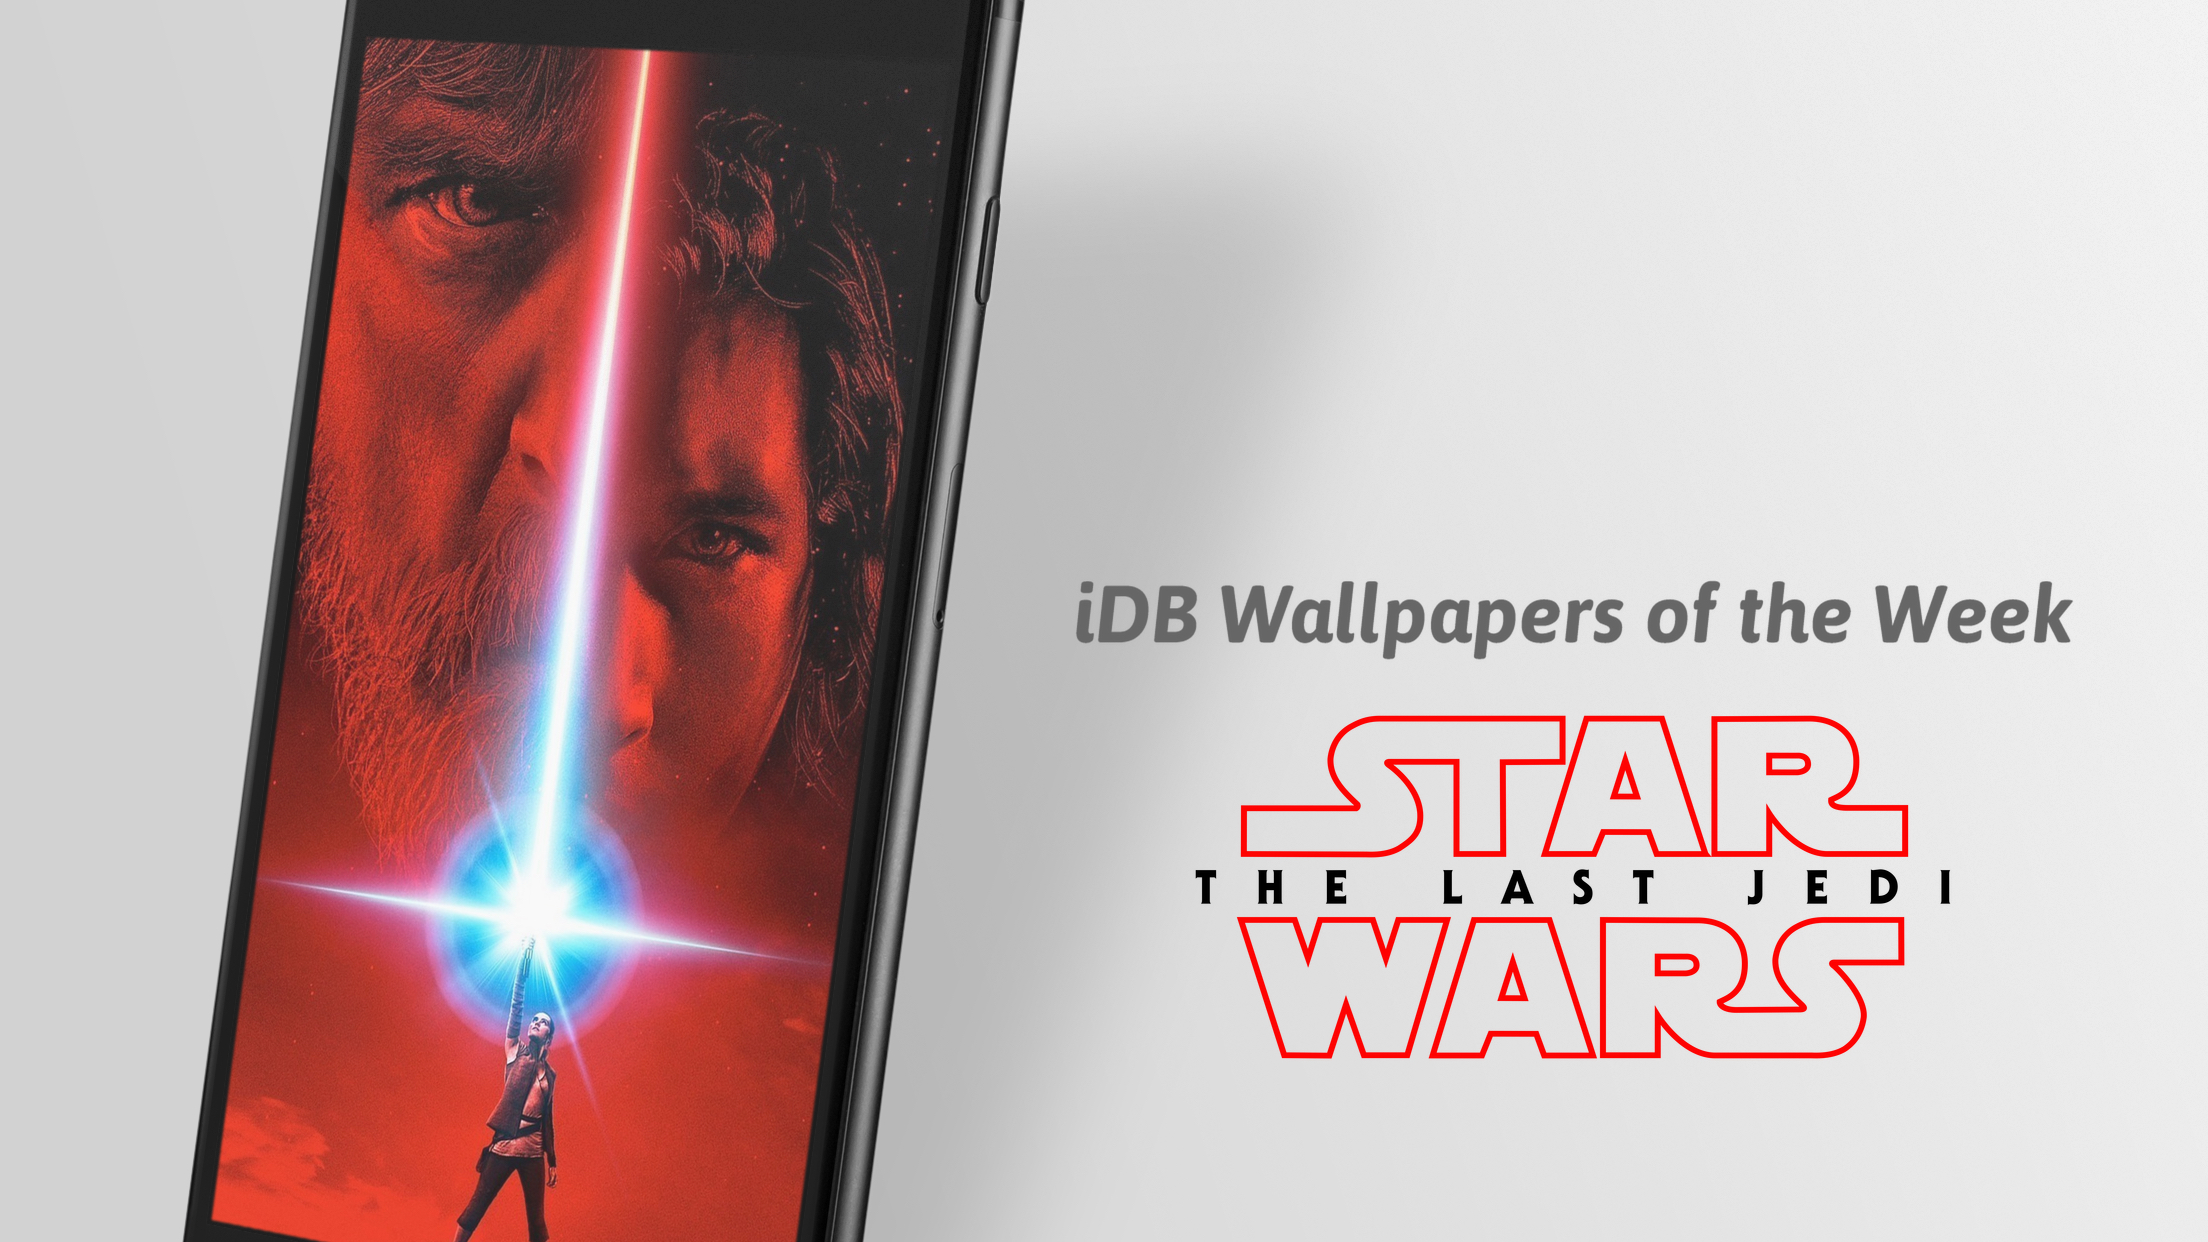 Star Wars Jedi Iphone Wallpapers